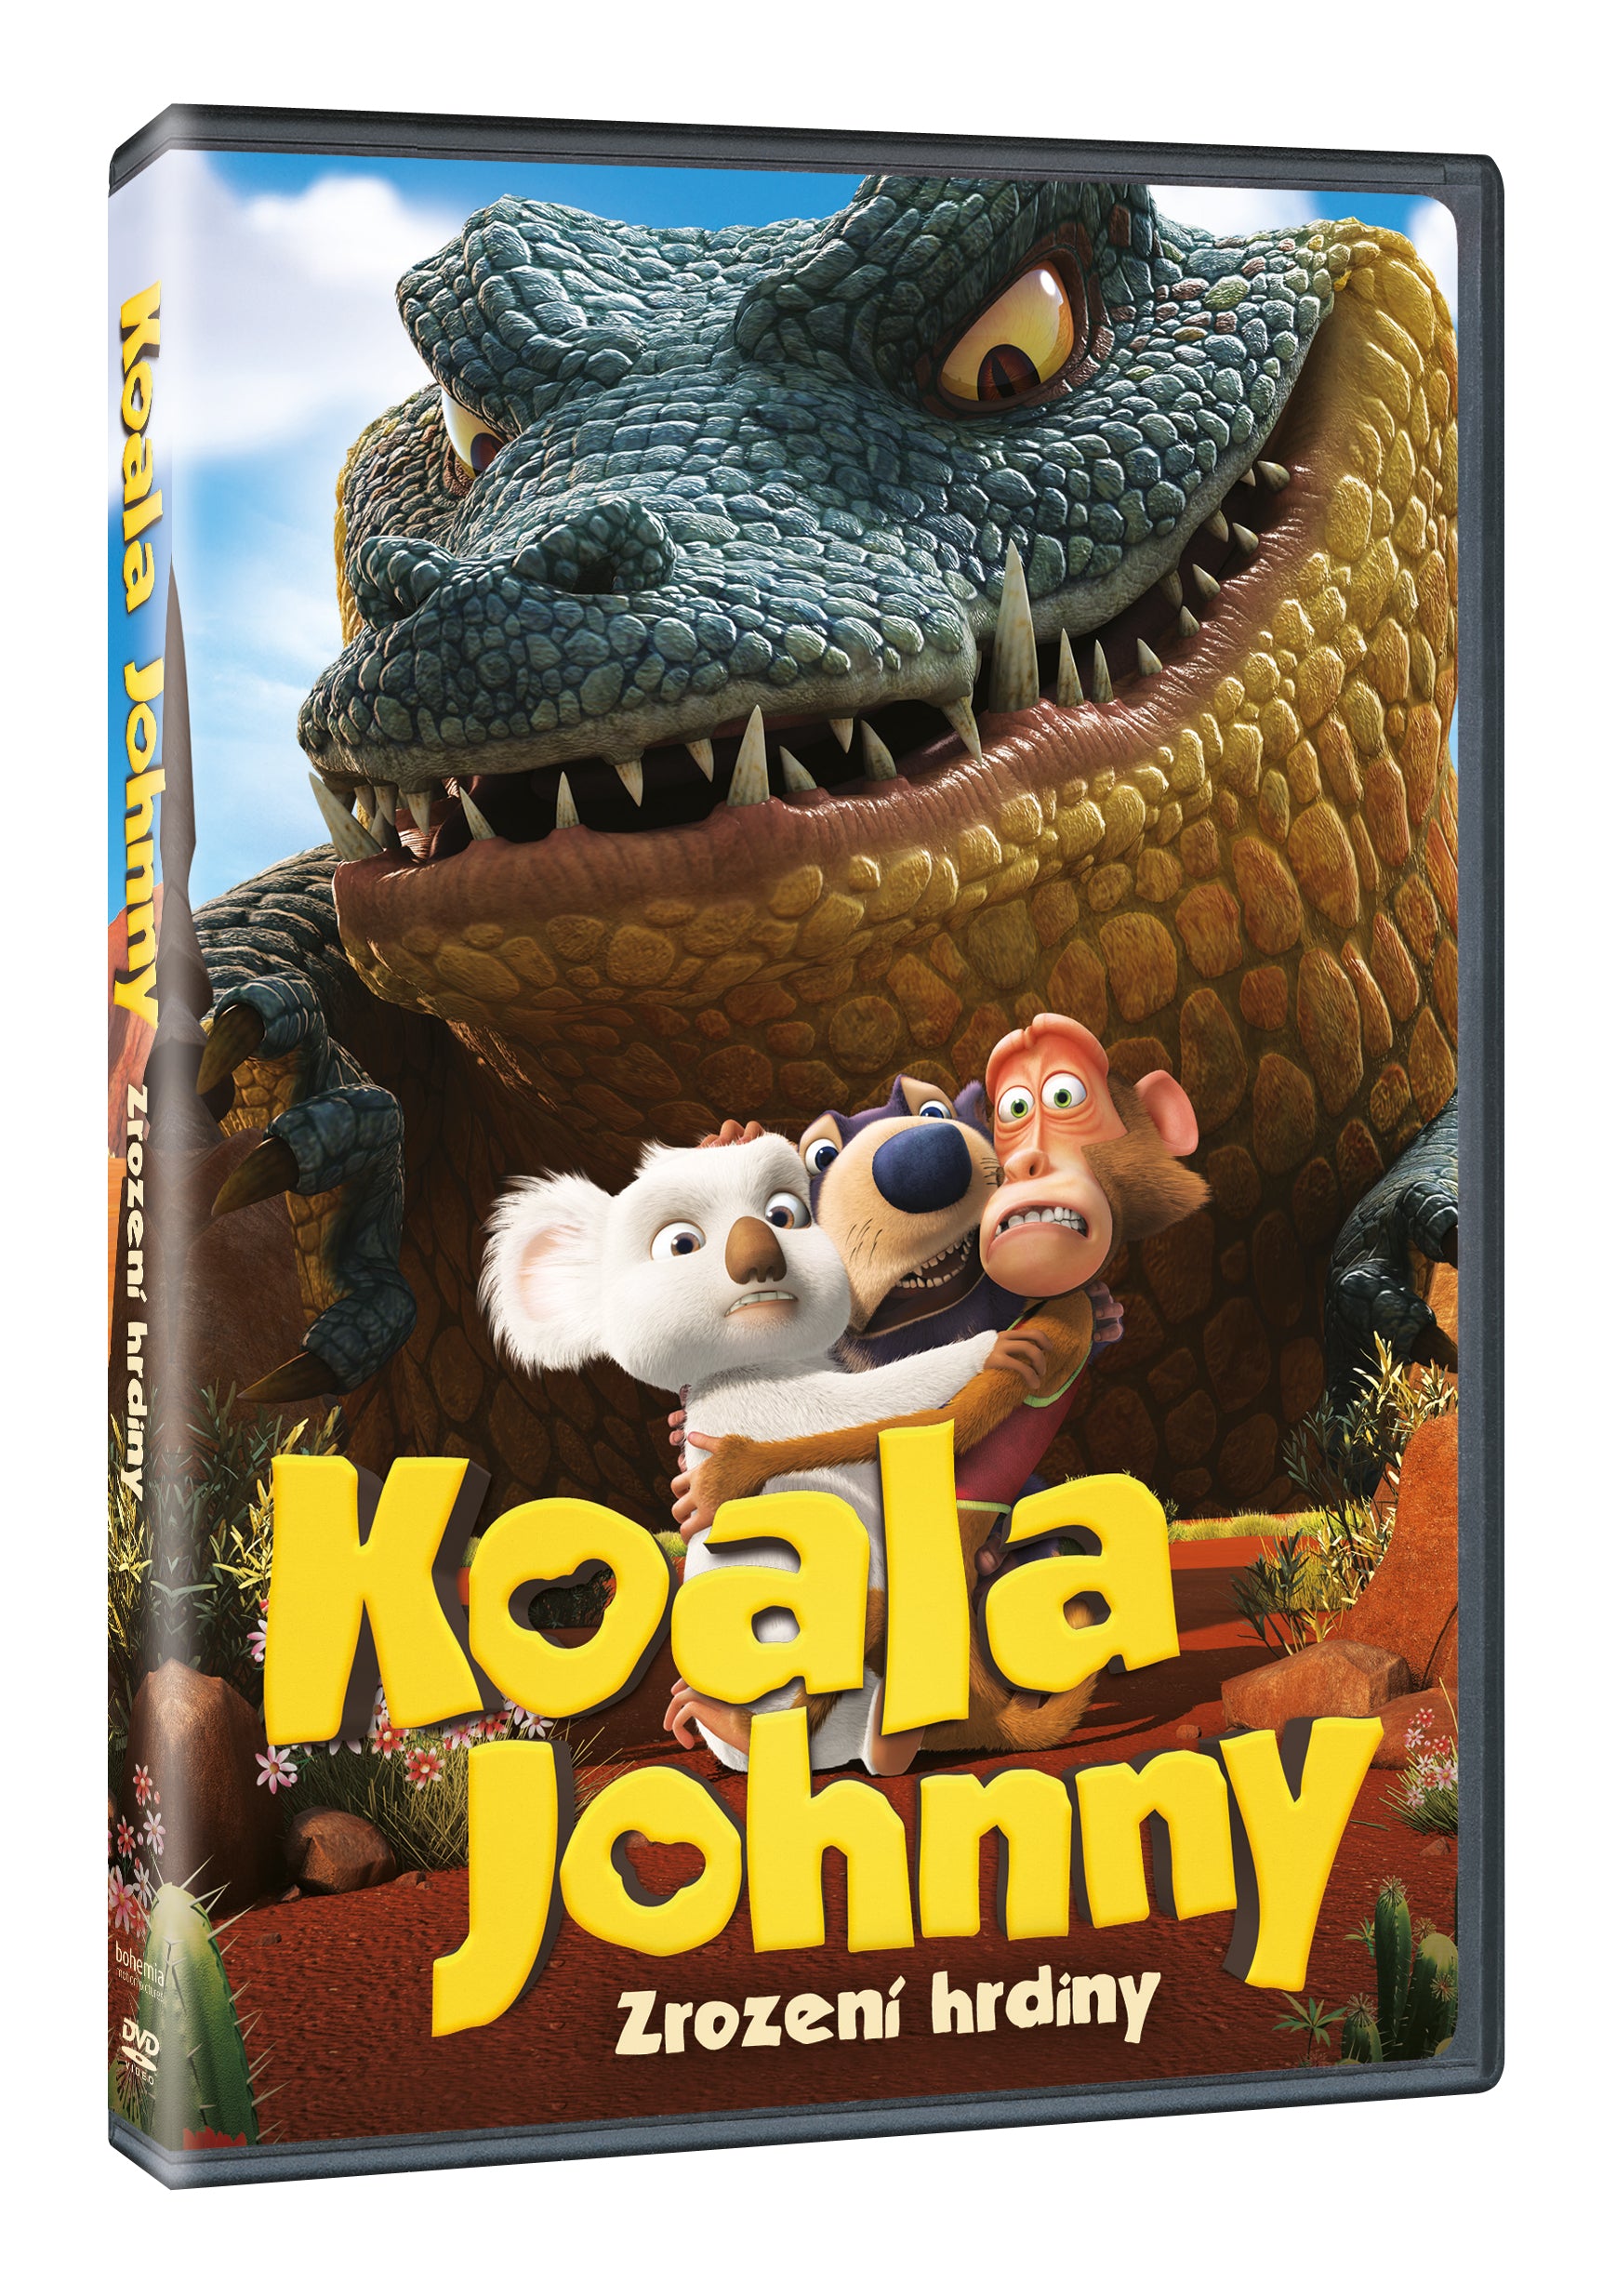 Koala Johnny: Zrozeni hrdiny DVD / The Koala Kid